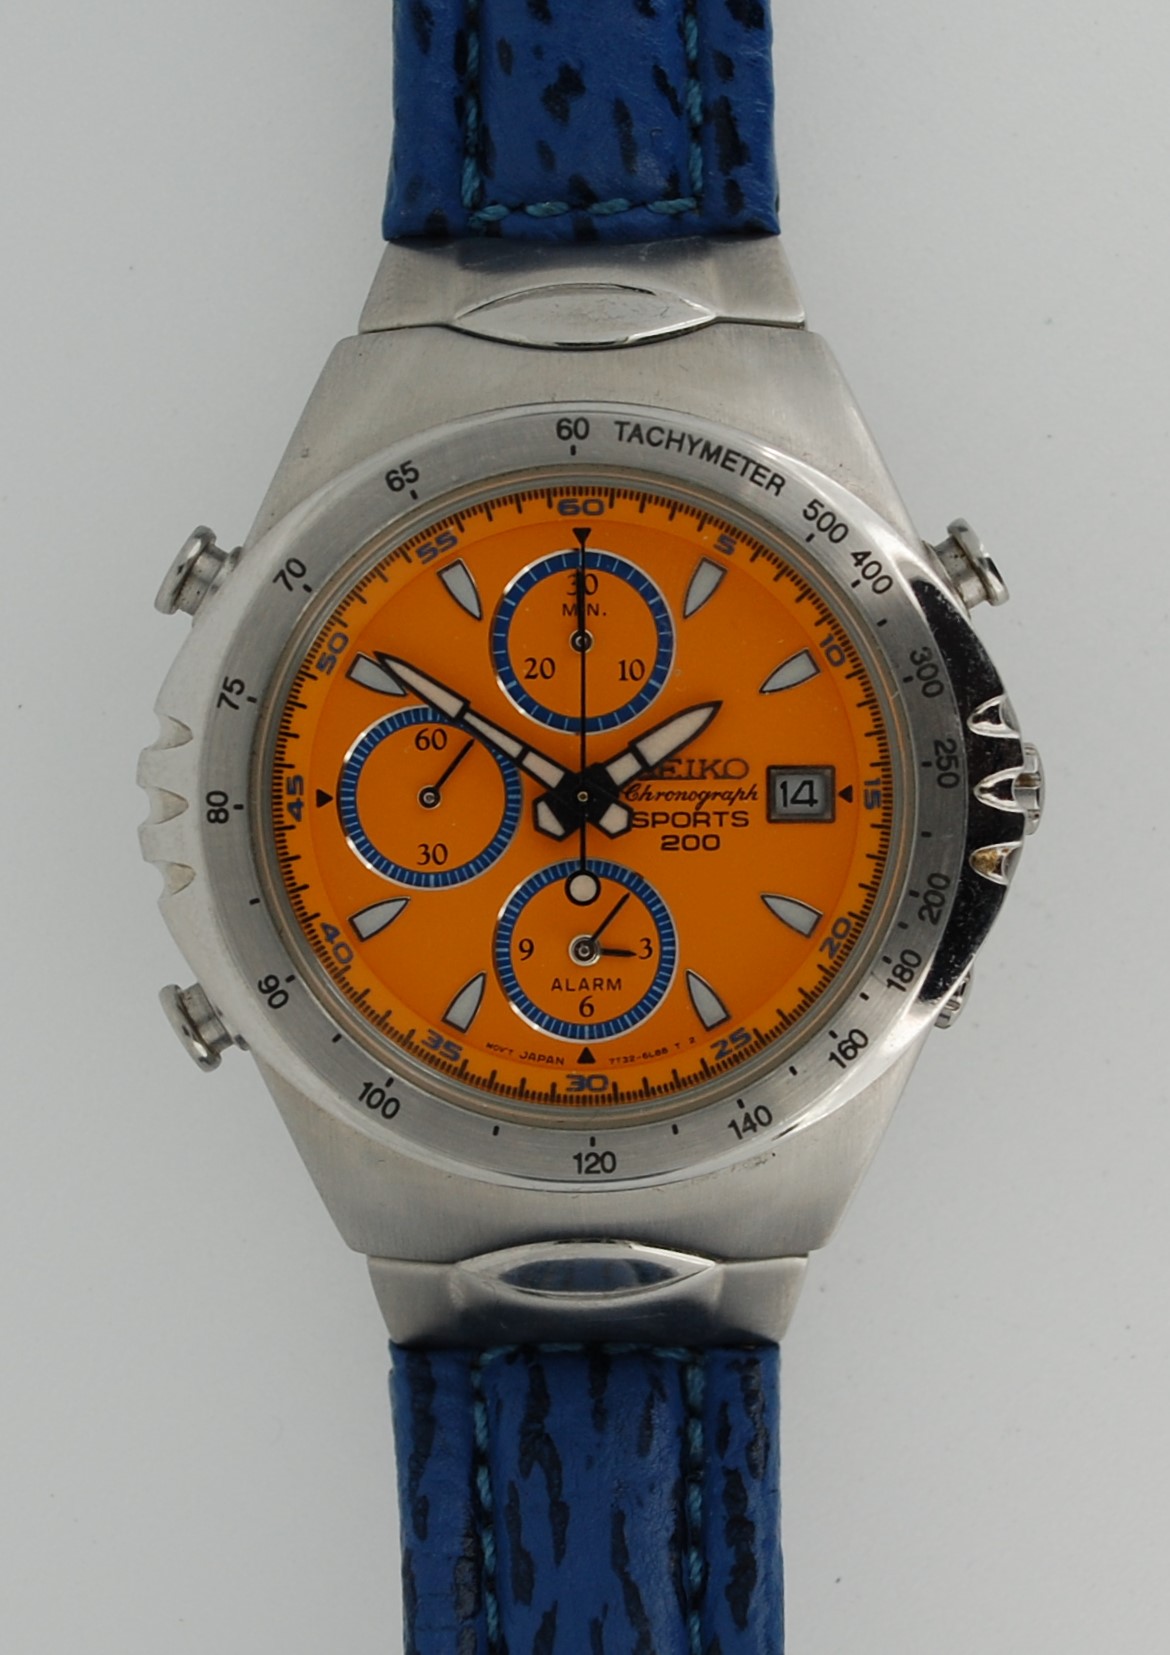 SOLD 1996 Seiko Sports 200 Giugiaro 7T32-6H60 - Birth Year Watches